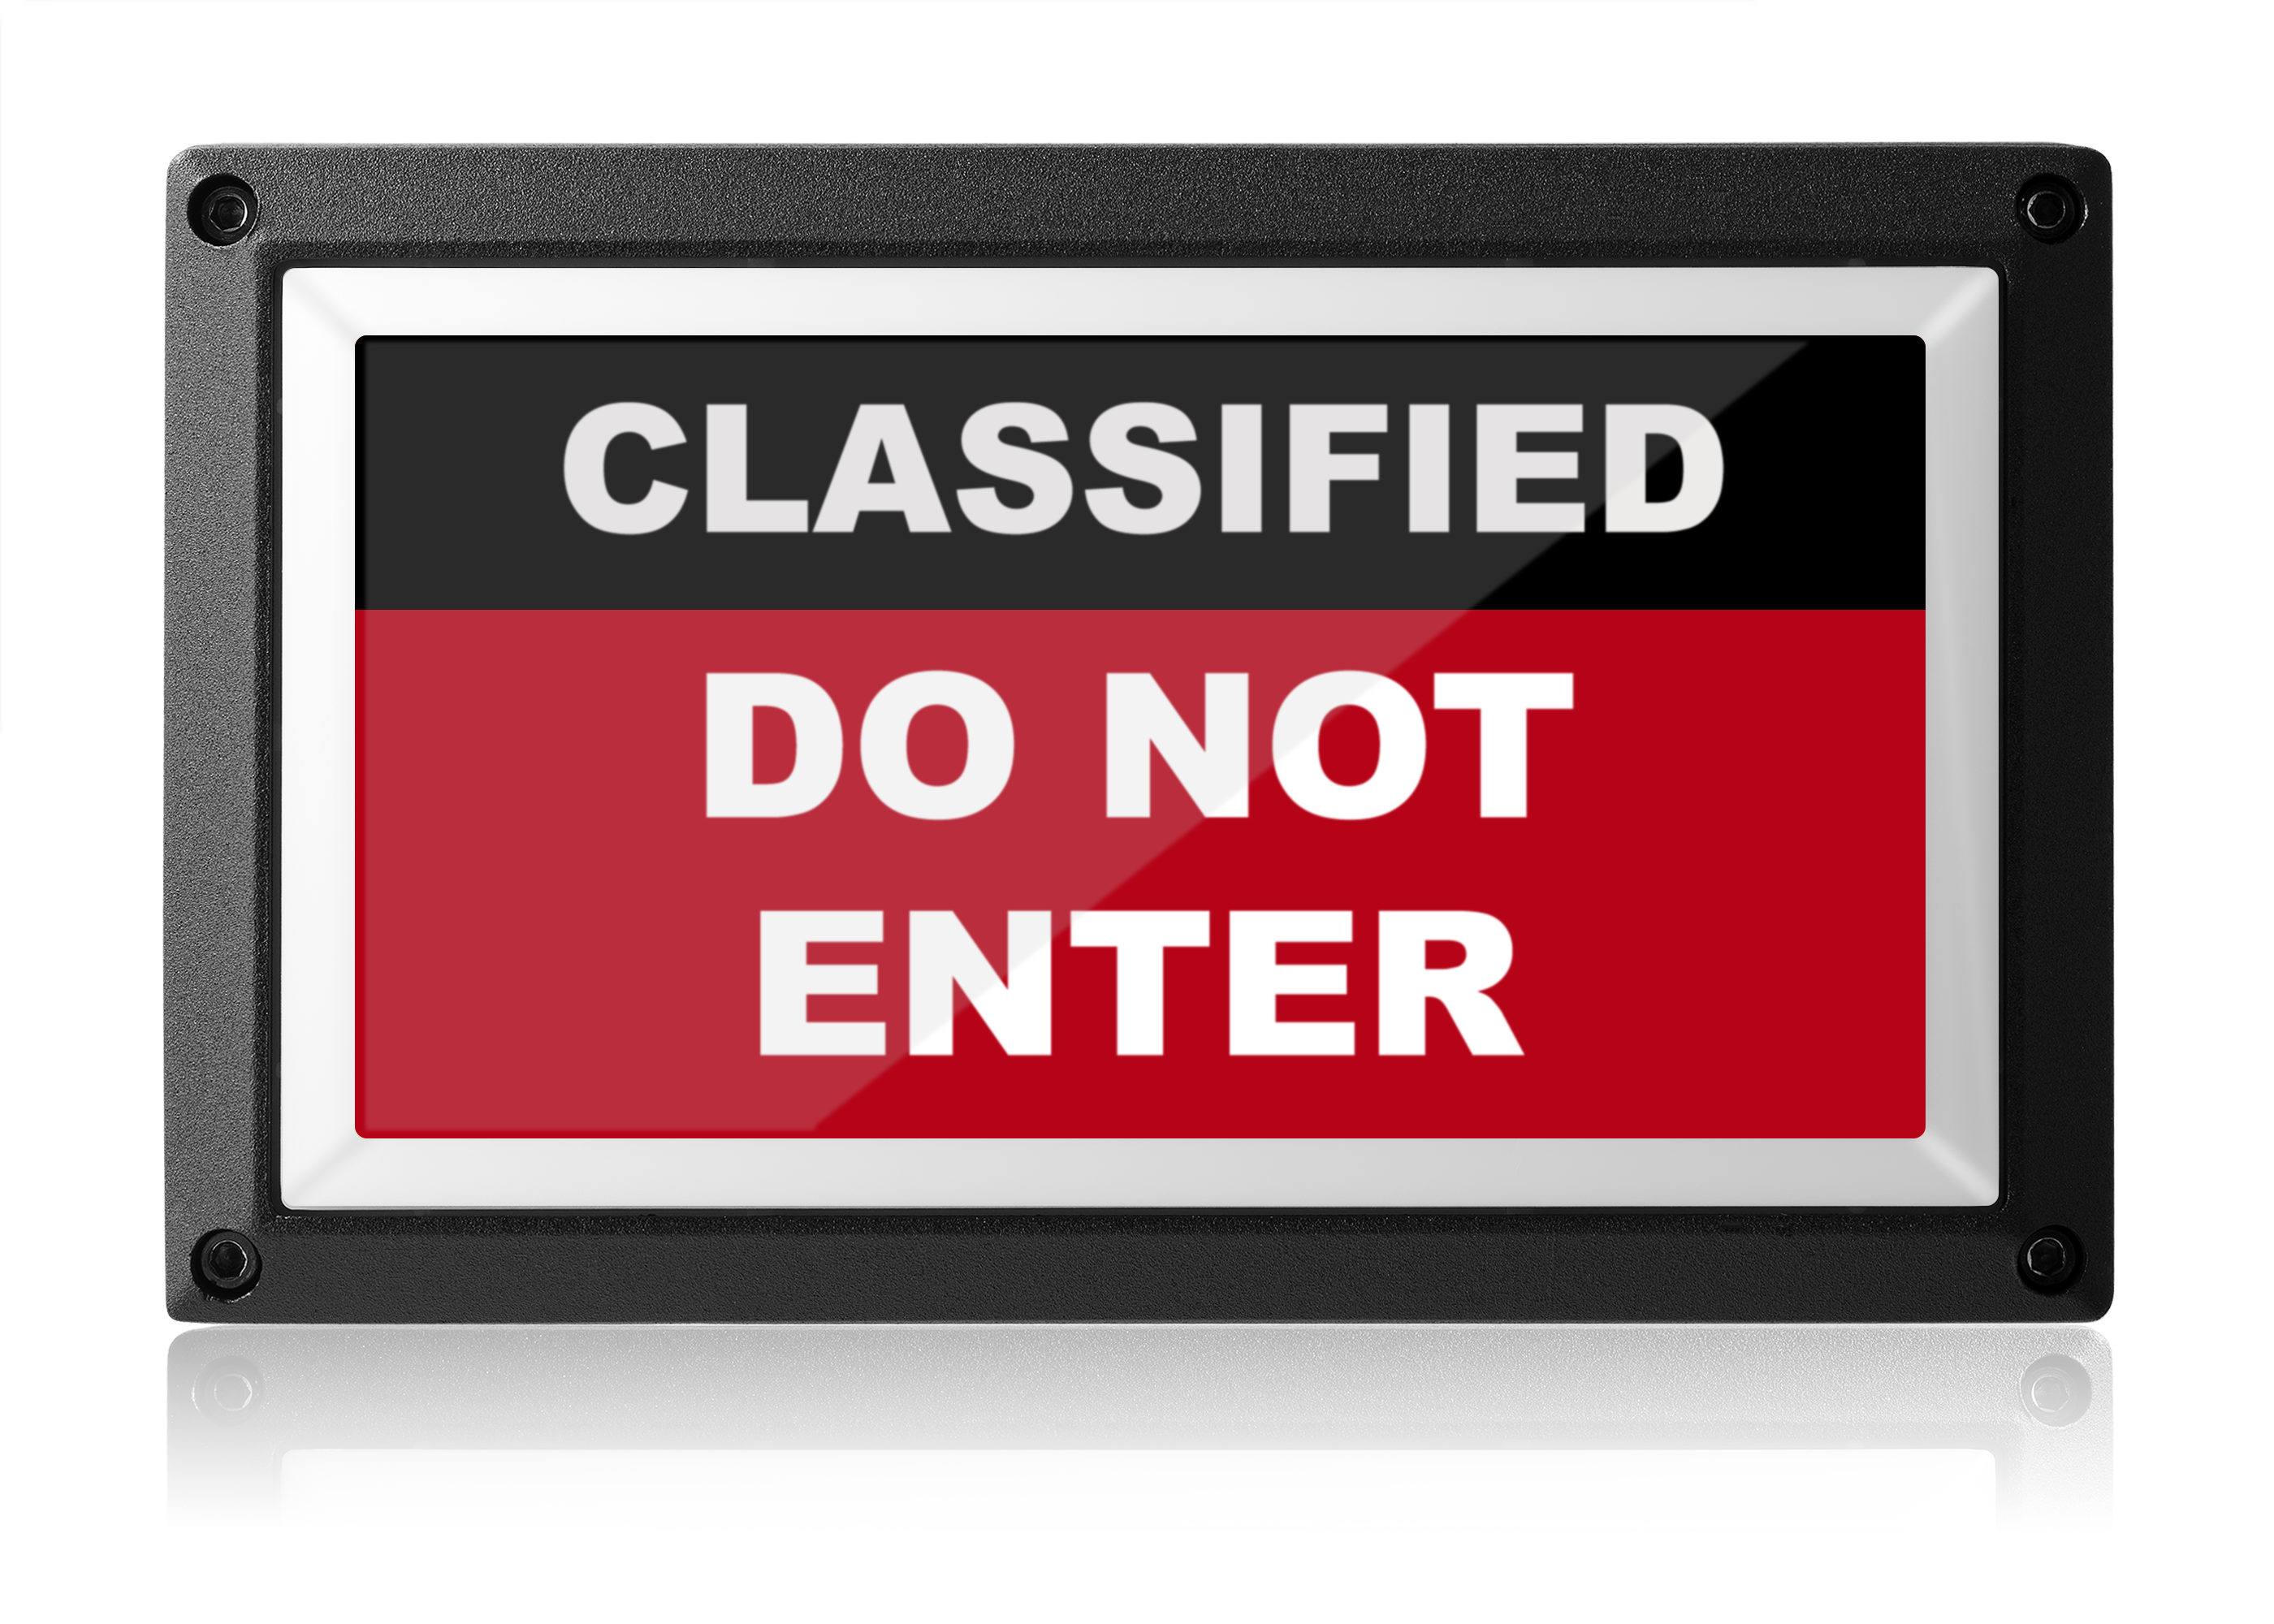 Classified Do Not Enter Light - Red ISO - Rekall Dynamics LED Sign